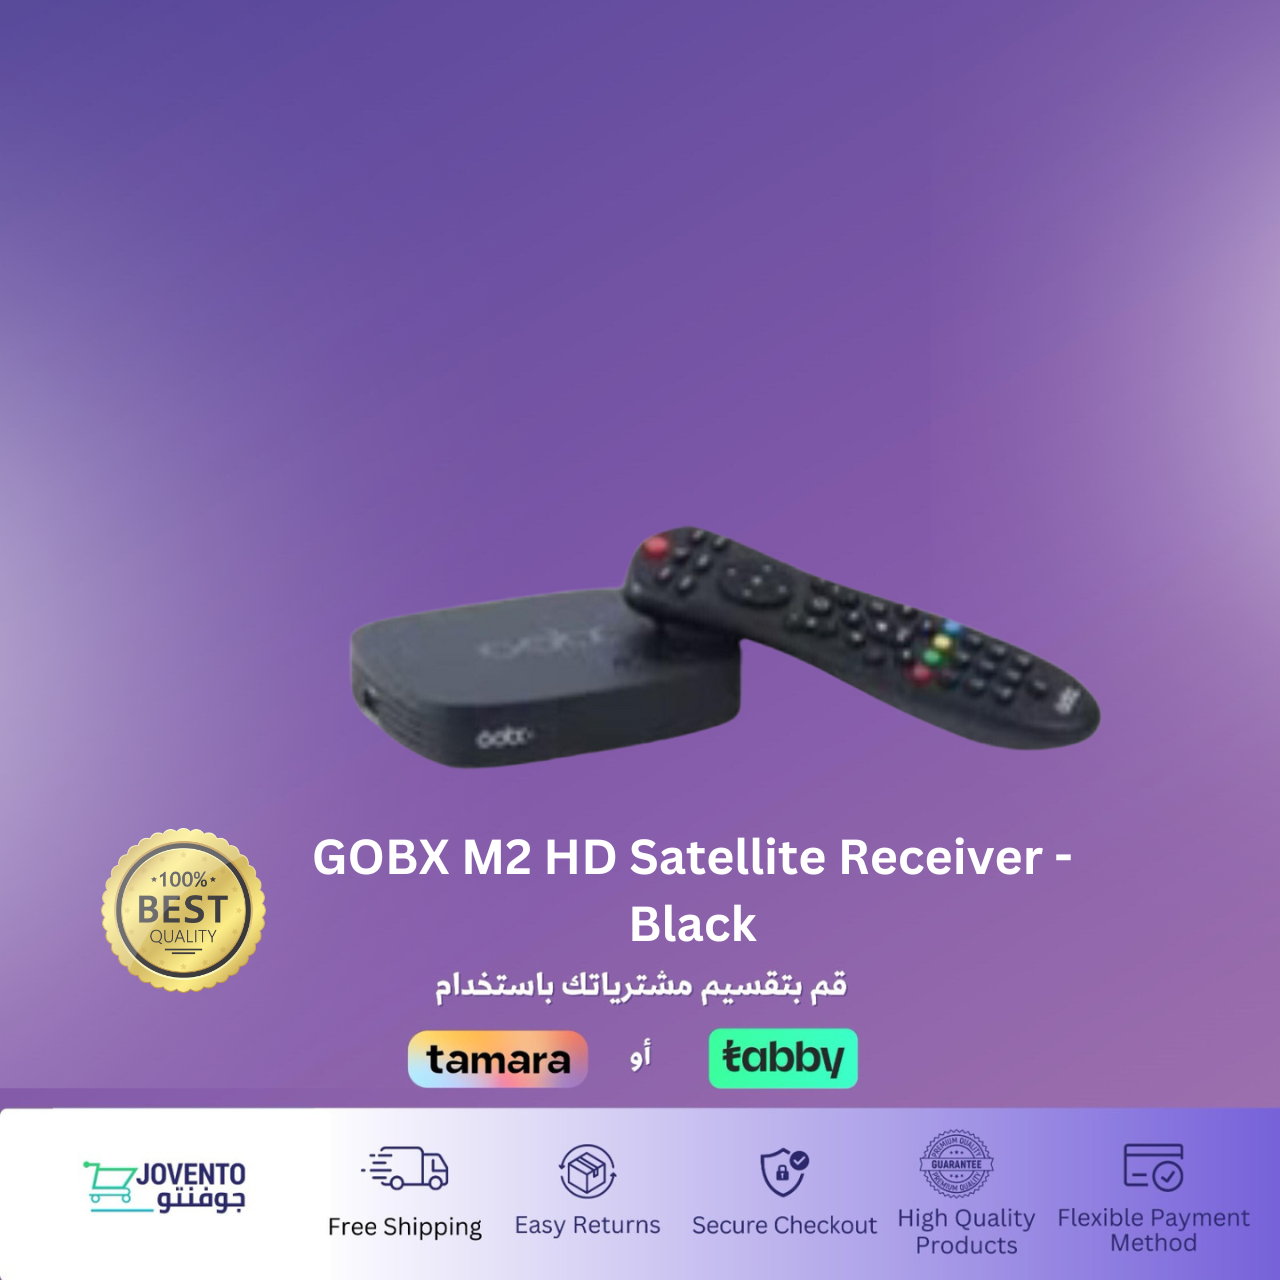 GOBX M2 HD Satellite Receiver - Black